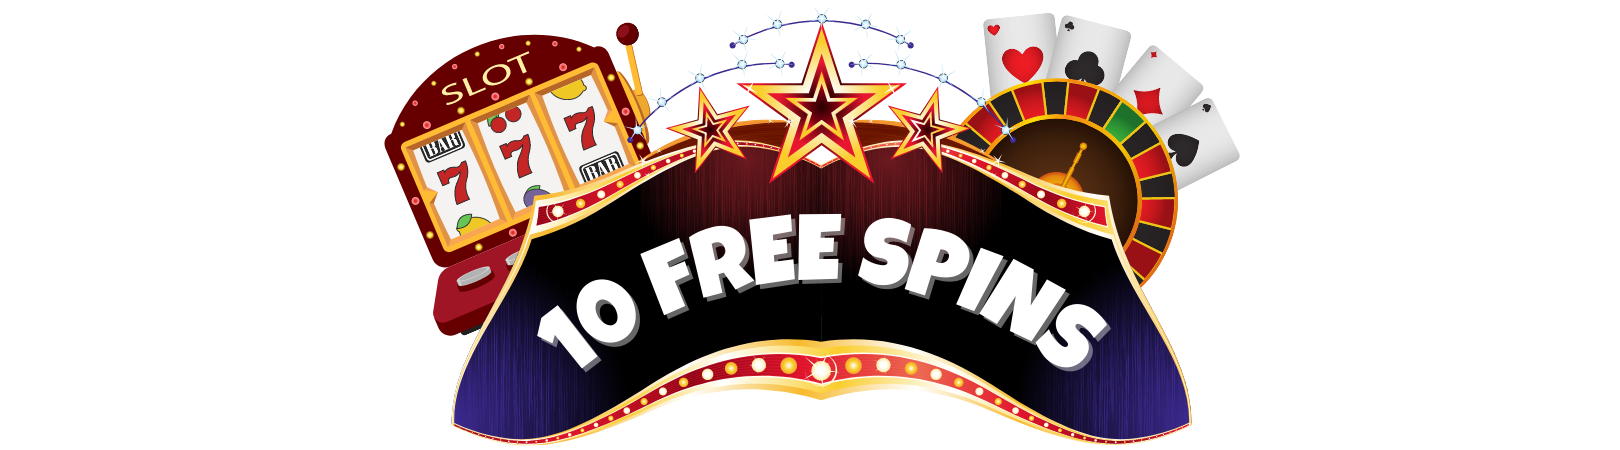 What Is 10 Free Spins No Deposit Bonus img